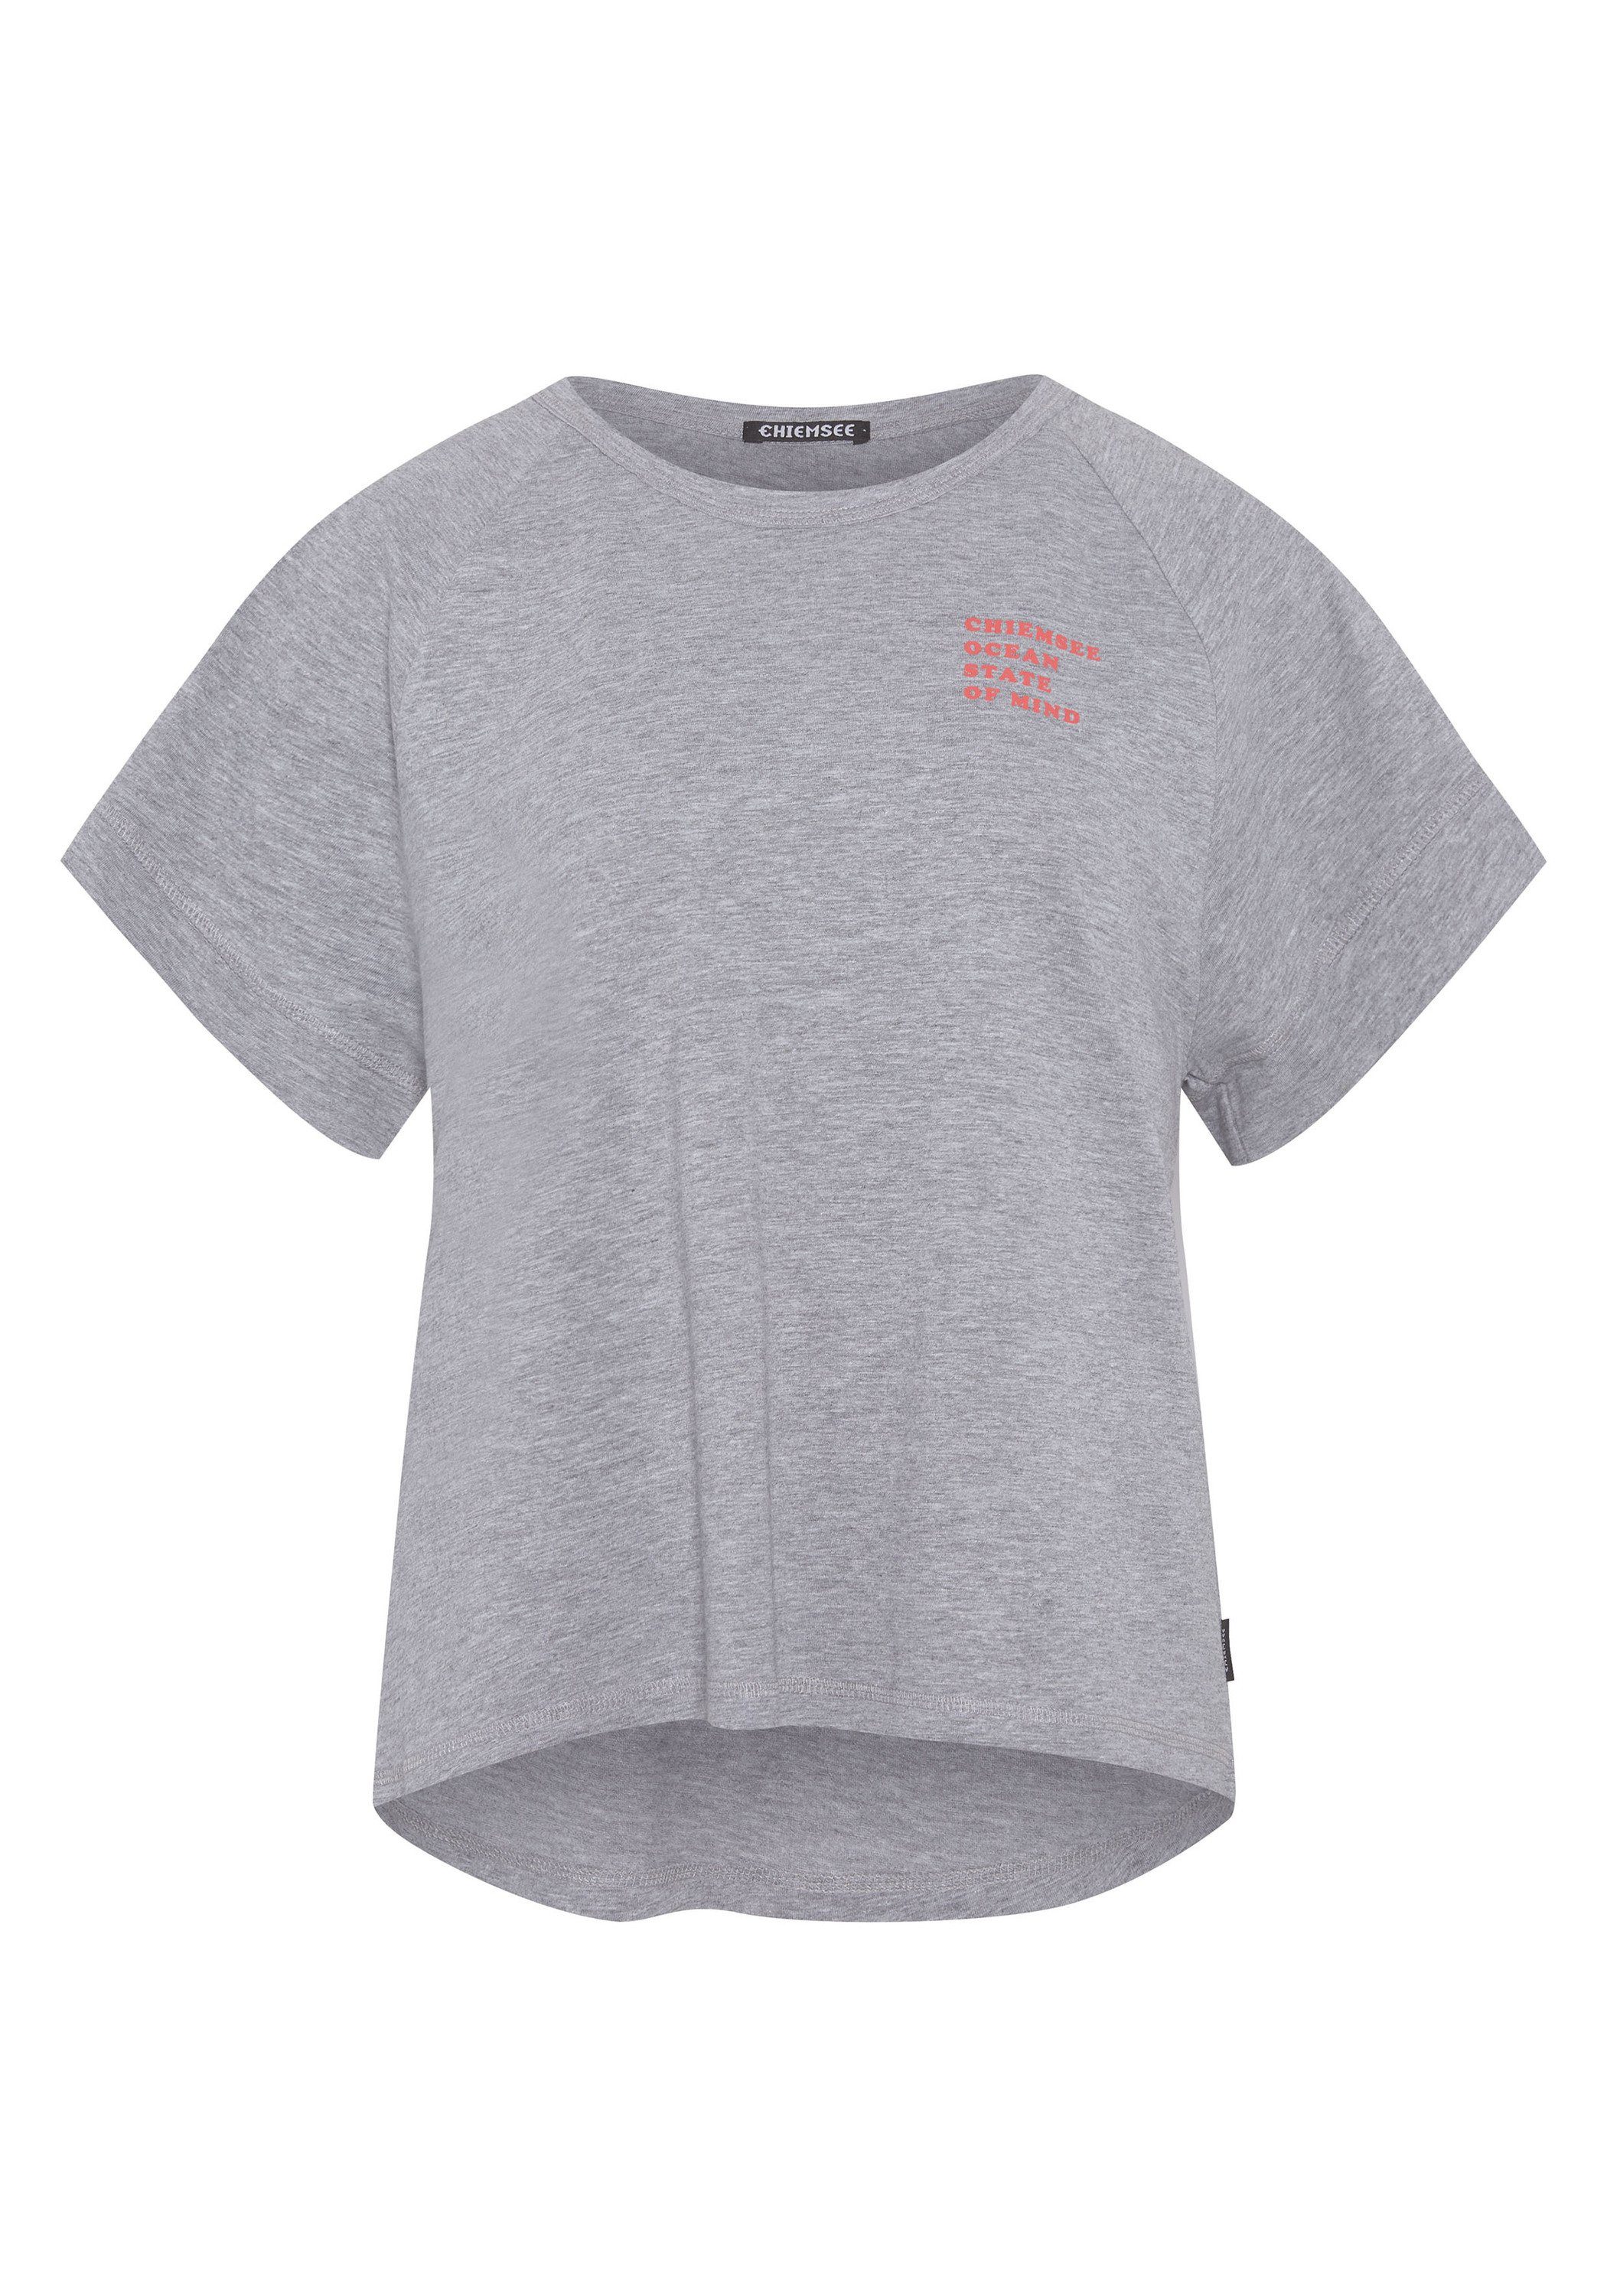 Chiemsee Print-Shirt Shirt in Vintage-Optik Neutral Melange 1 Gray 17-4402M